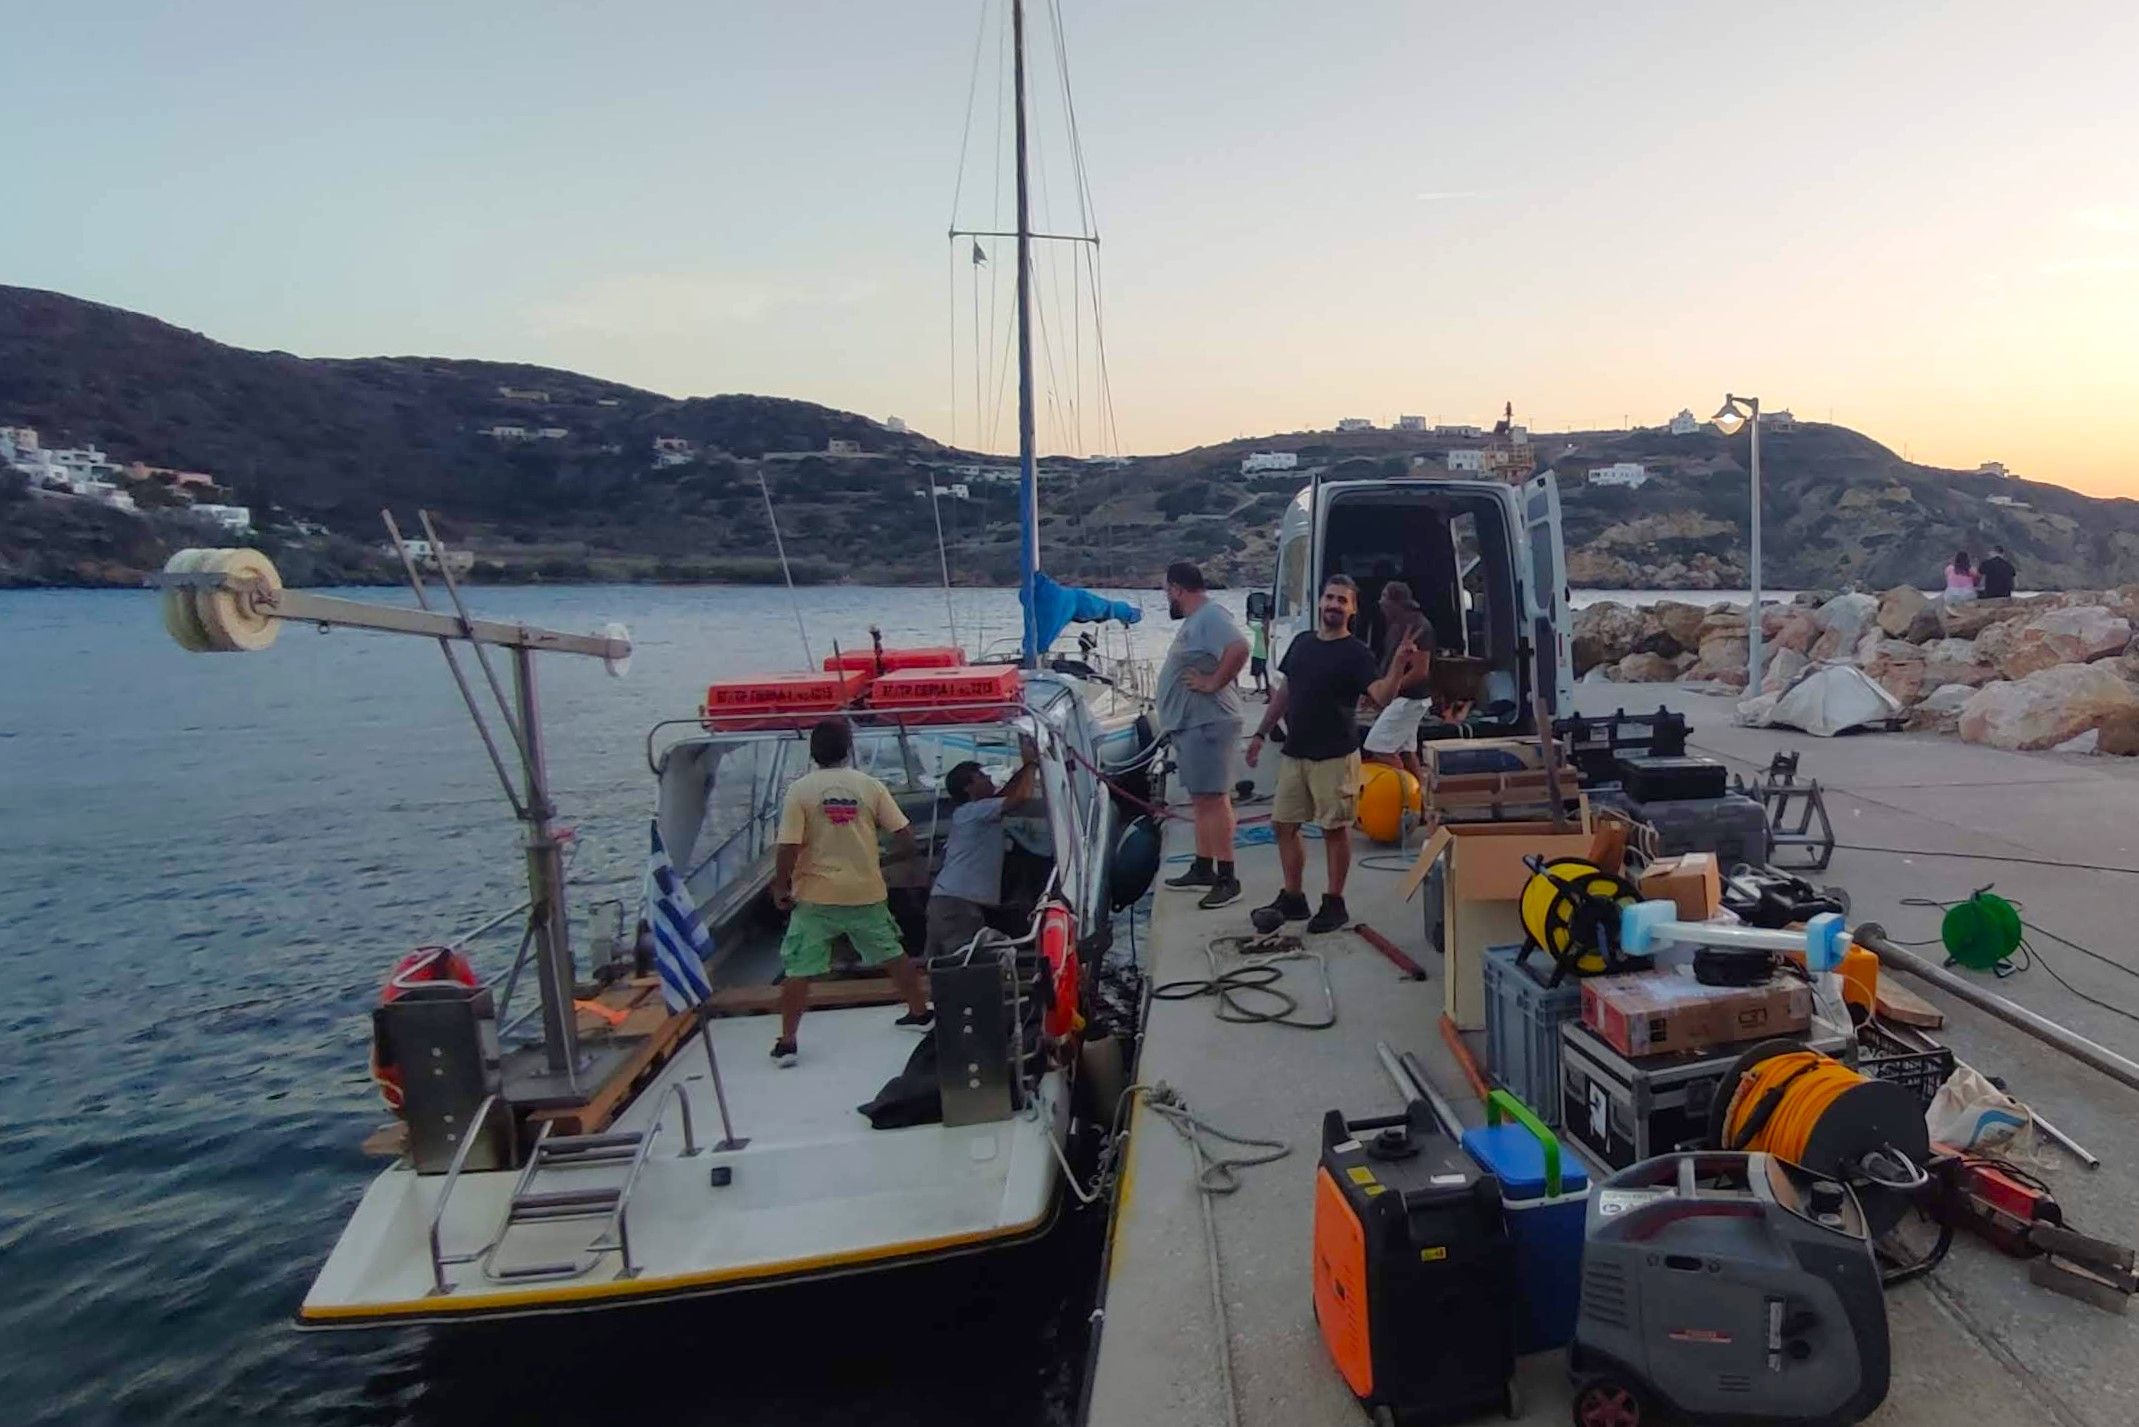 Getting ready for the Vodafone Posidonia Program @ Syros Island